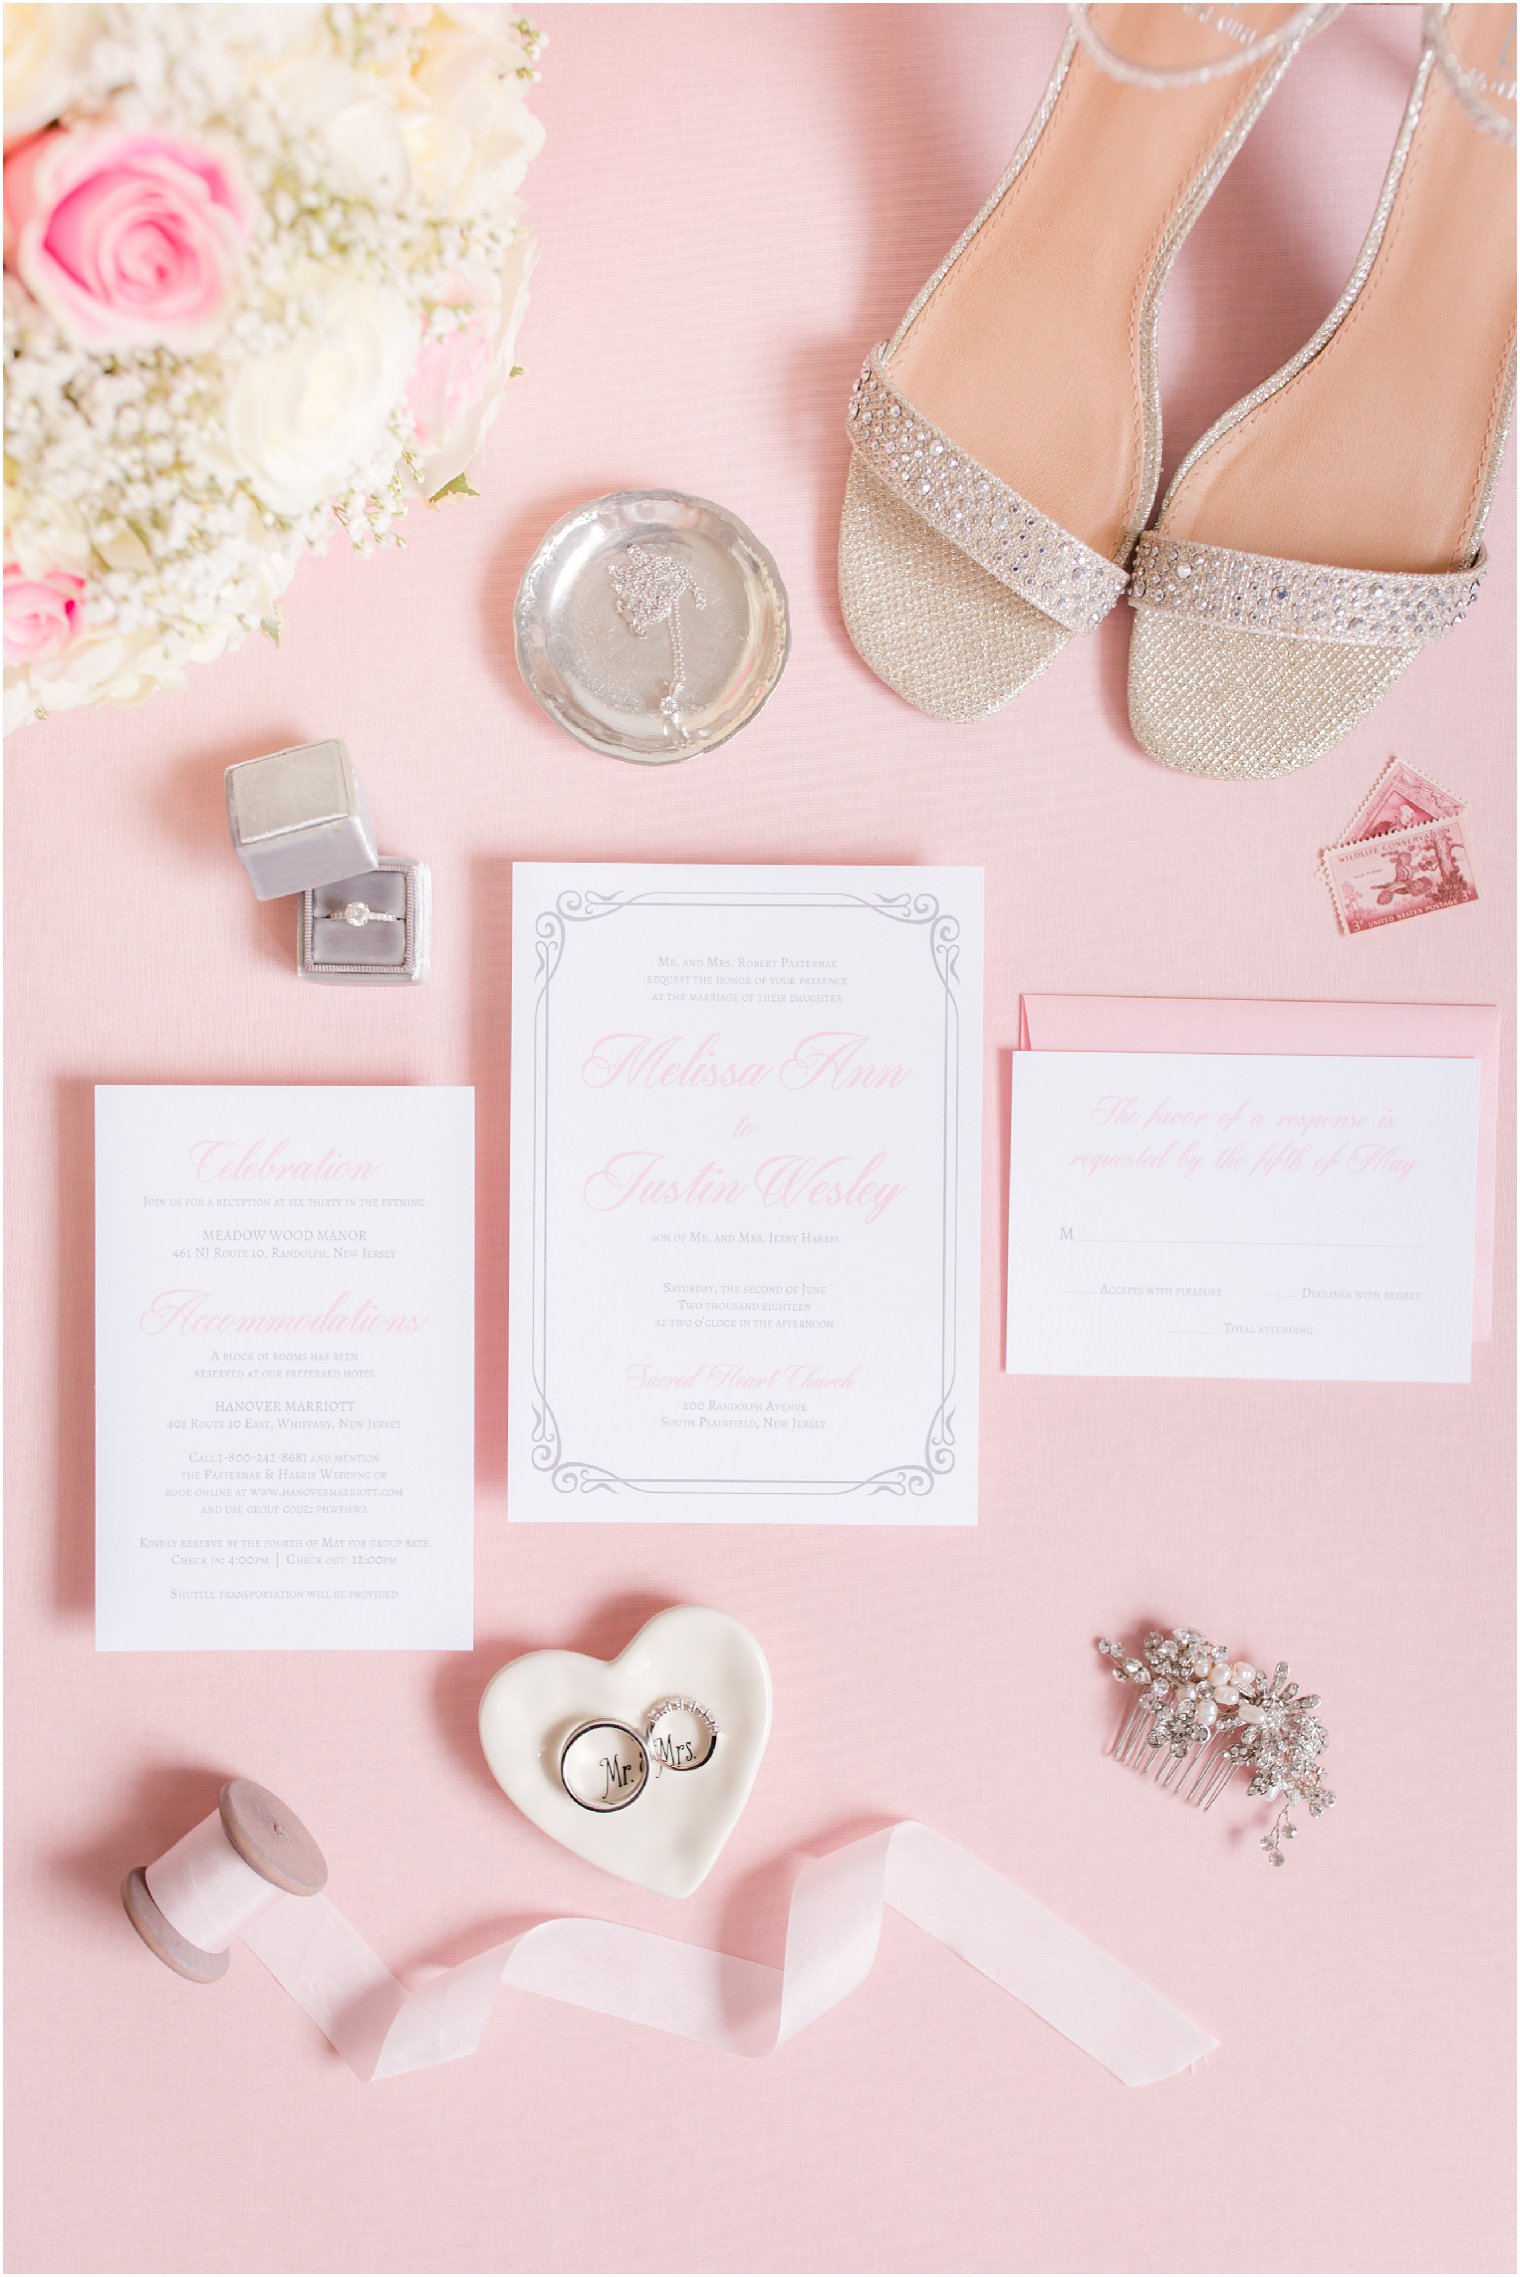 wedding invitation by laurel cove creative